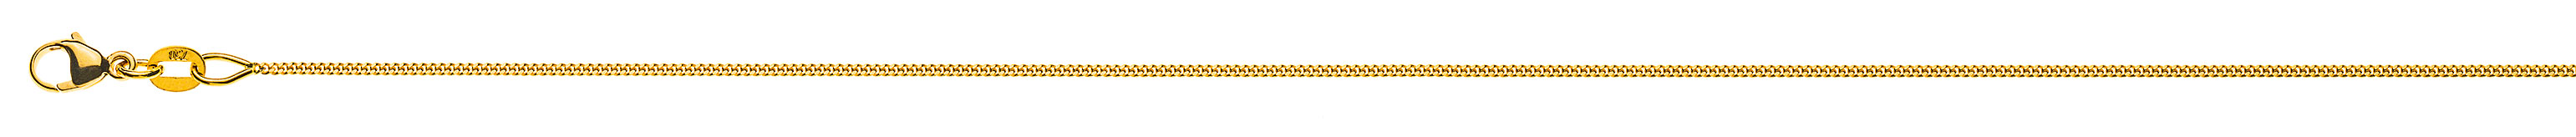 AURONOS Prestige Necklace yellow gold 18K curb chain polished 42cm 1.0mm